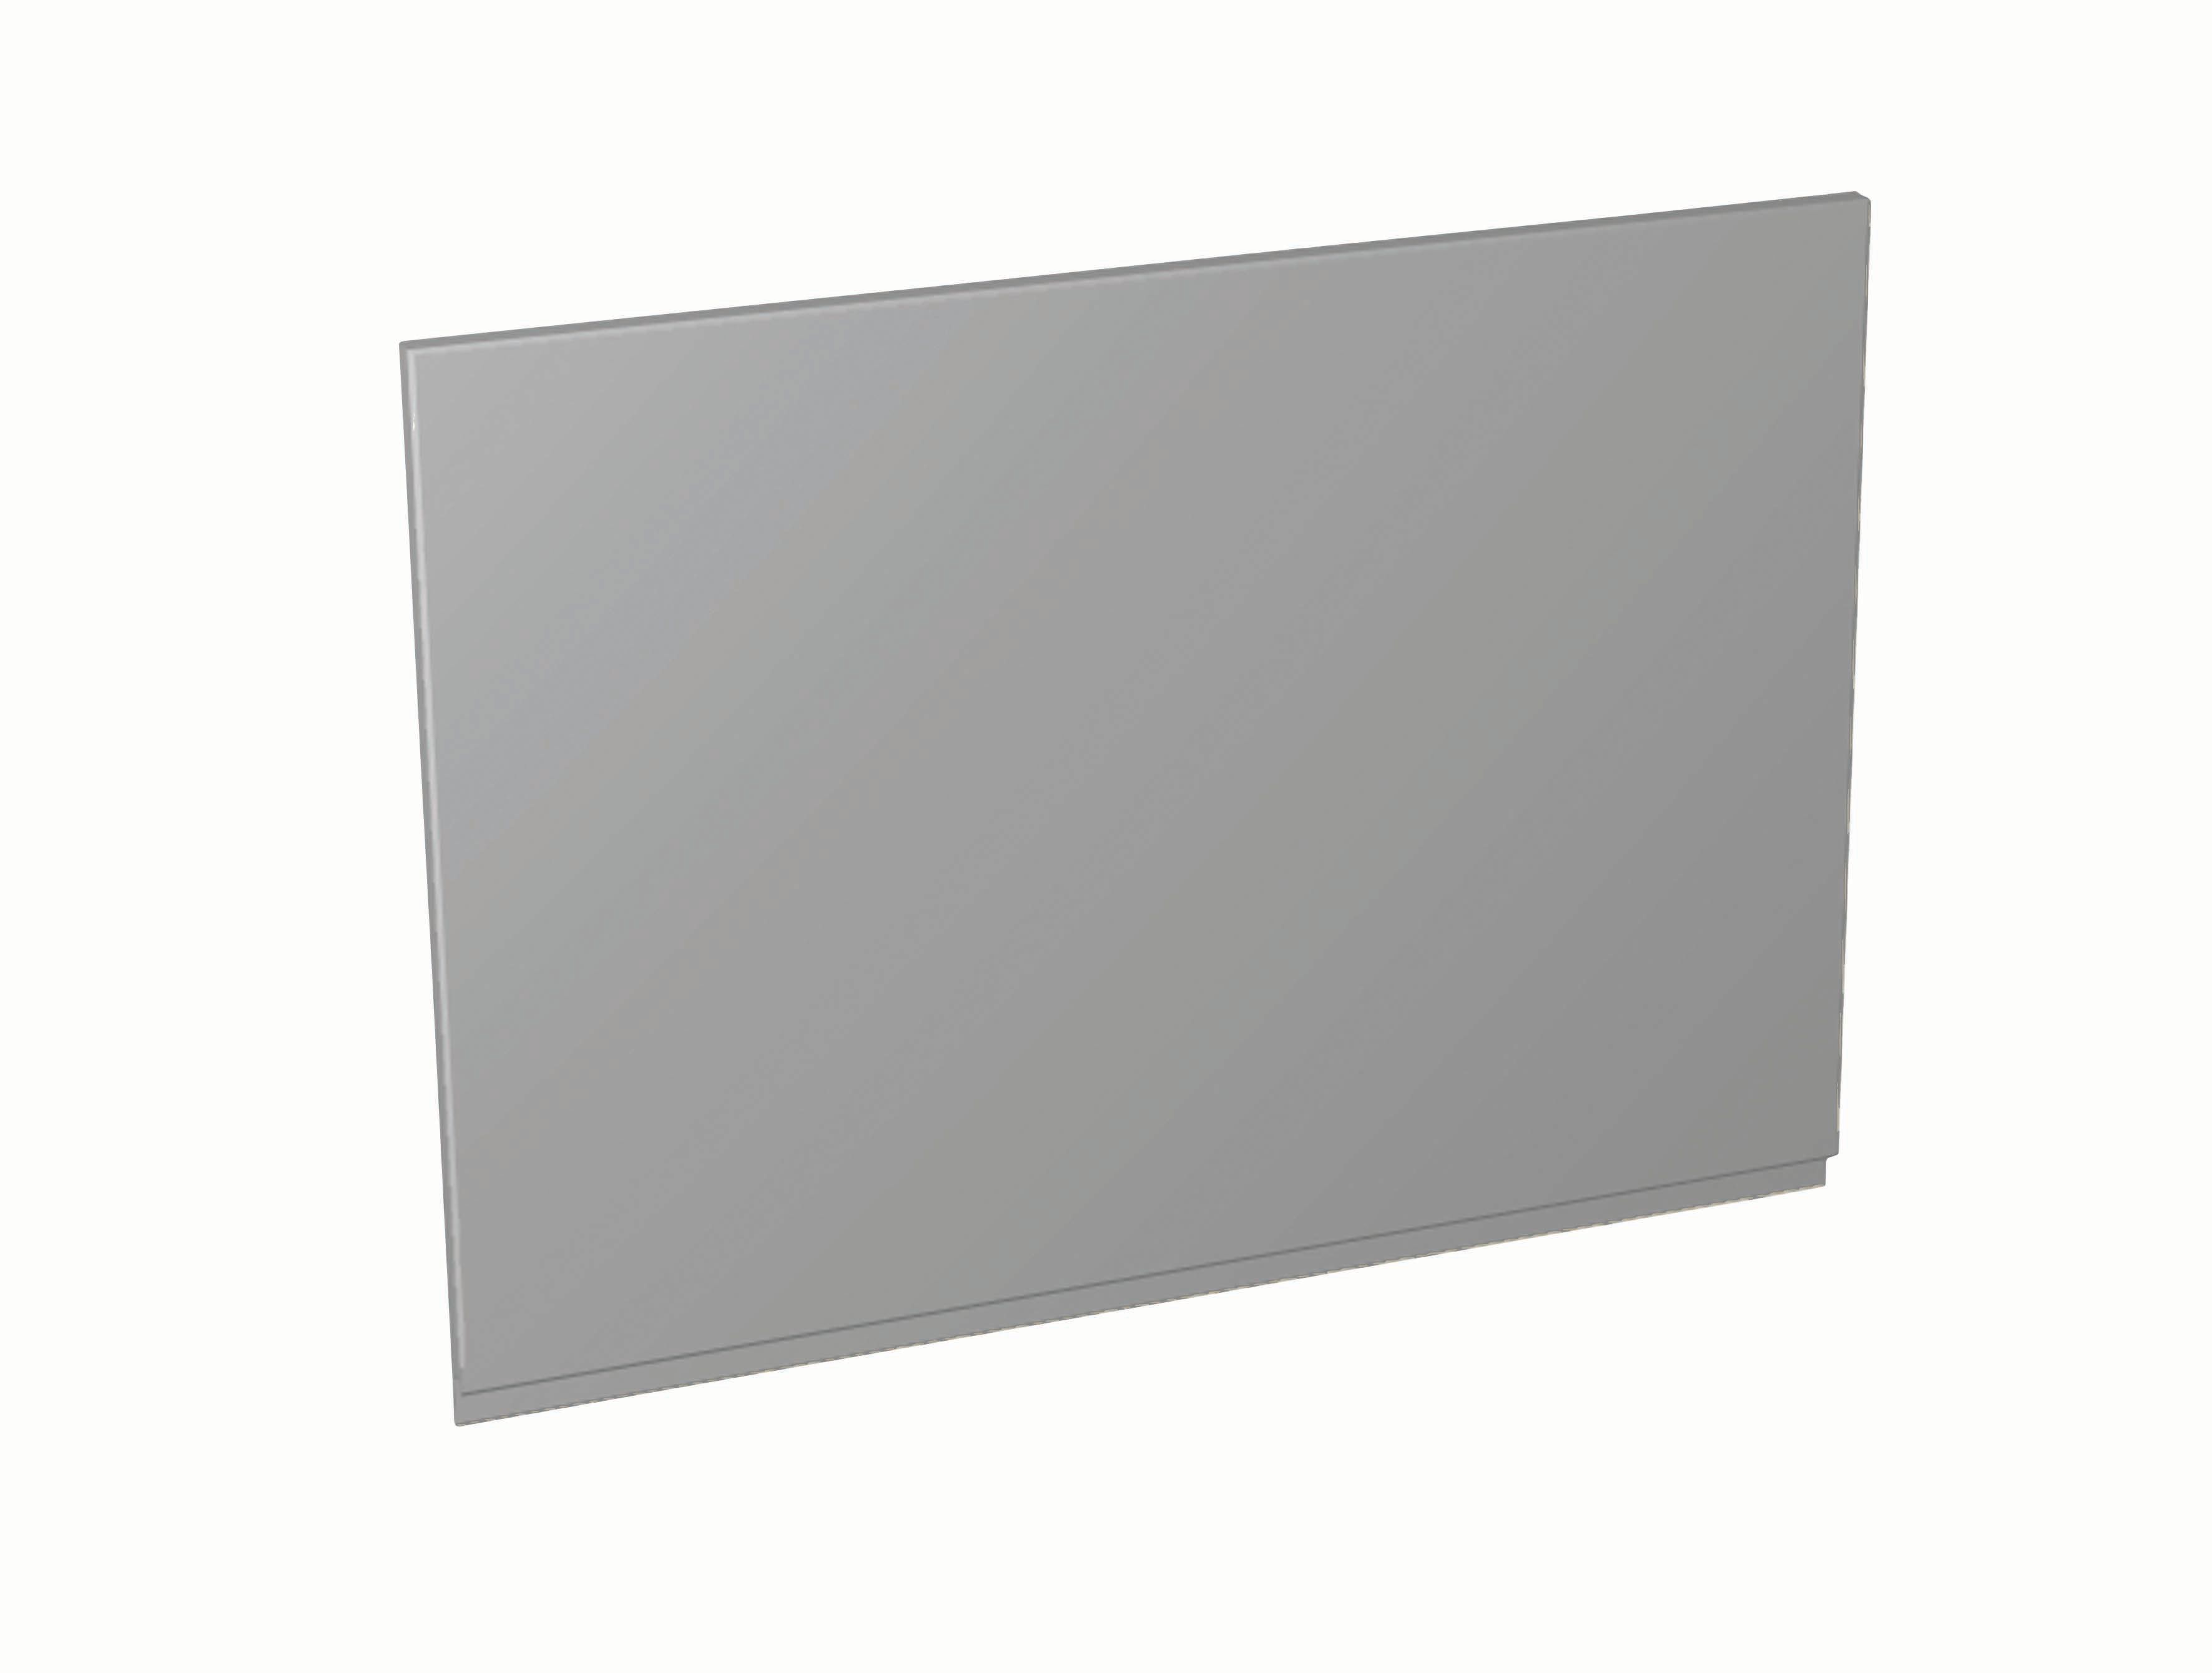 Image of Wickes Madison Grey Gloss Handleless Appliance Door (D) - 600 x 437mm